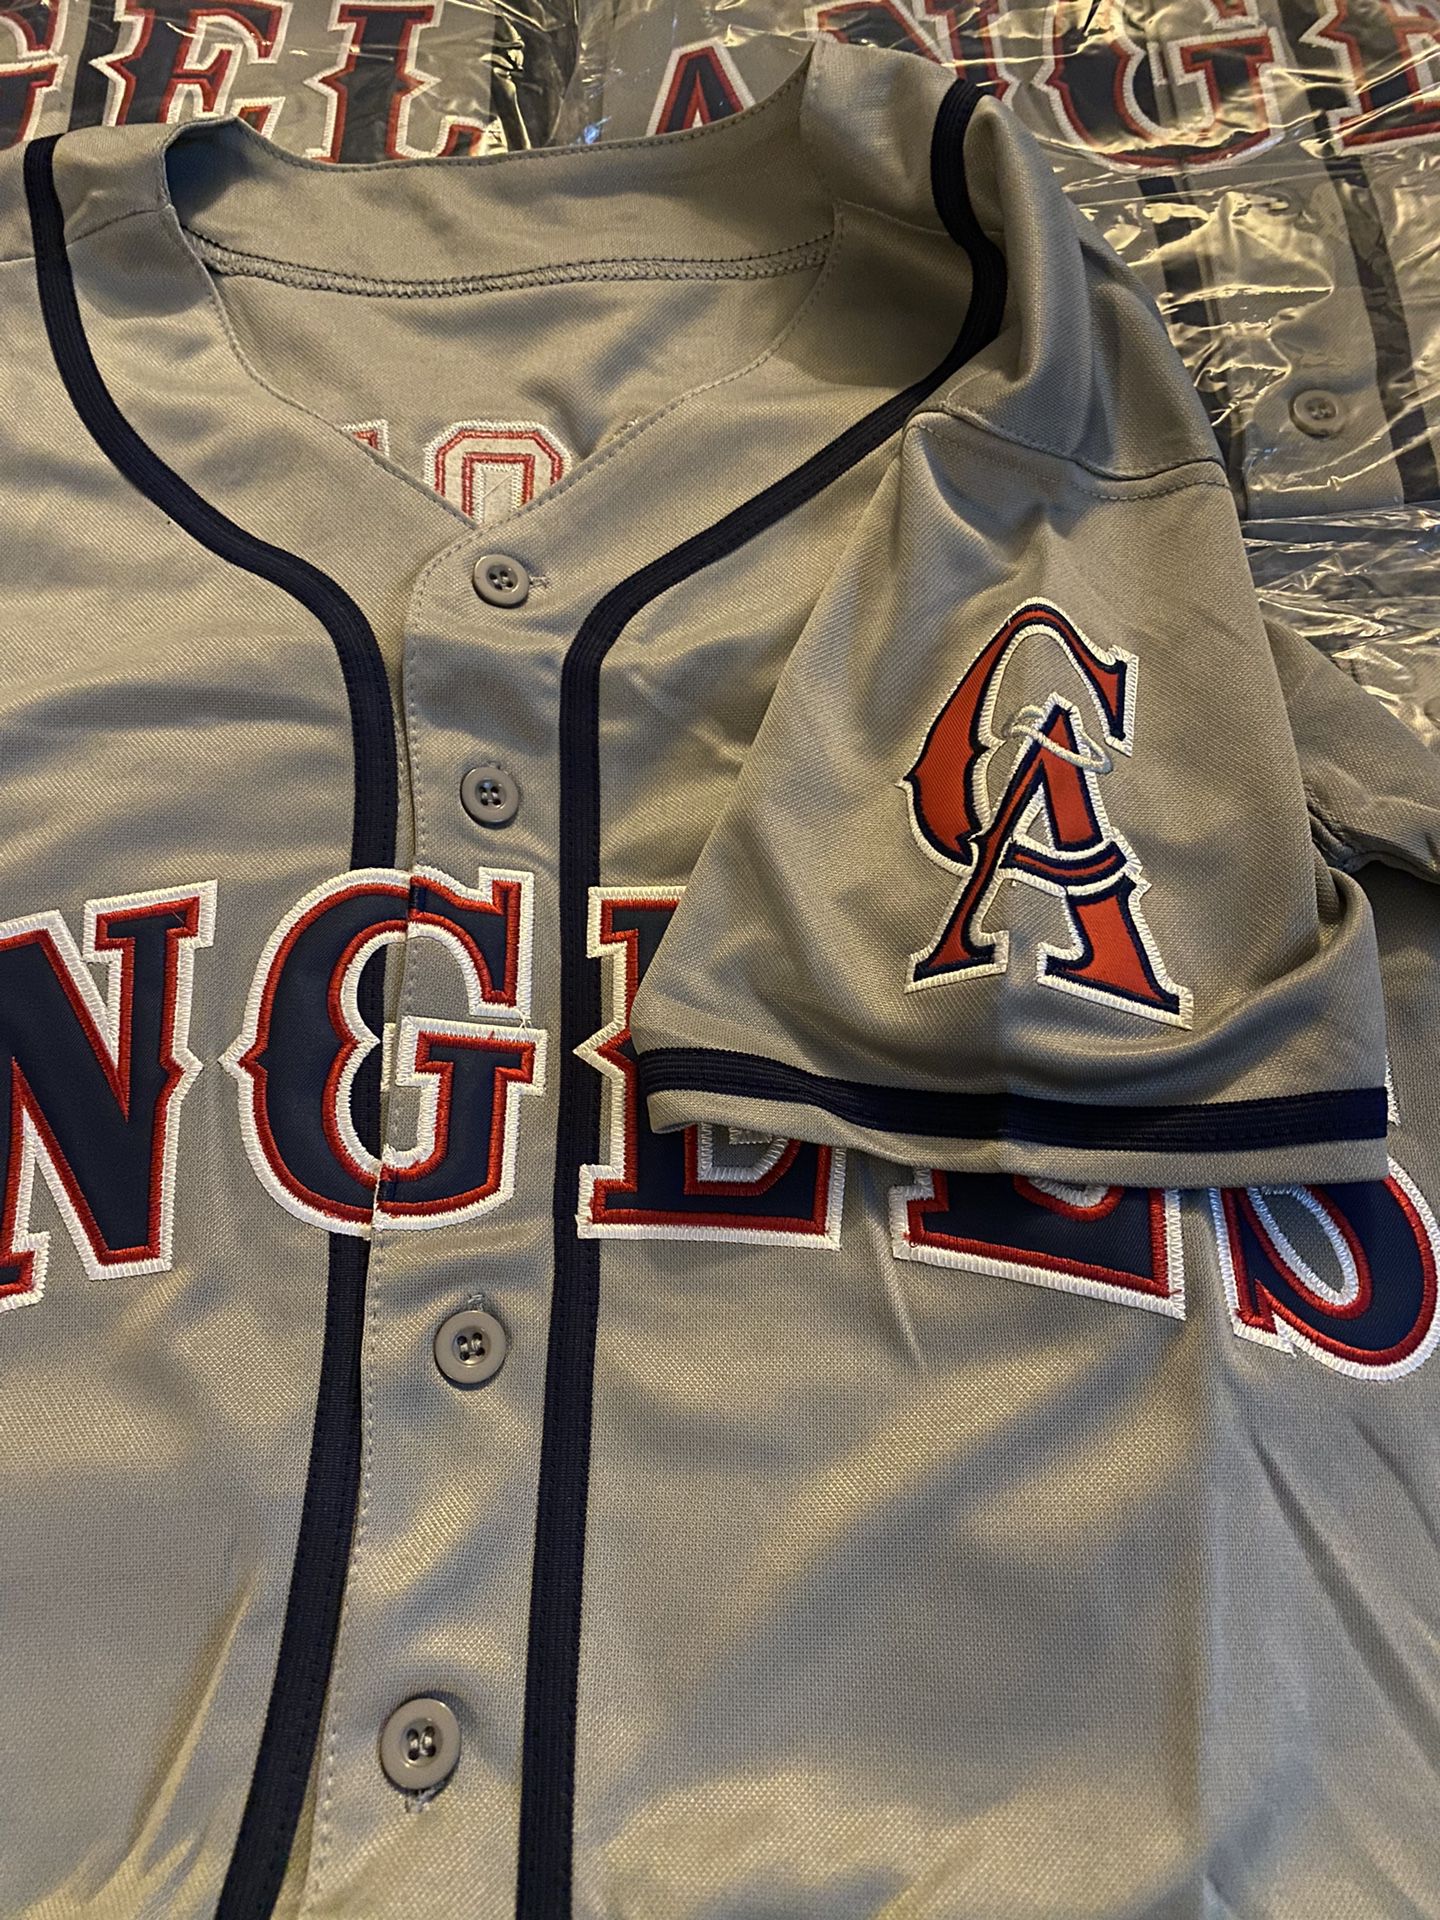 Cheap Baseball Jersey Shirts Youth Los Angeles Angels Jersey #27 Mike Trout  Jersey boys 100% Stitched Logos Kids Sports Jerseys - купить по выгодной  цене